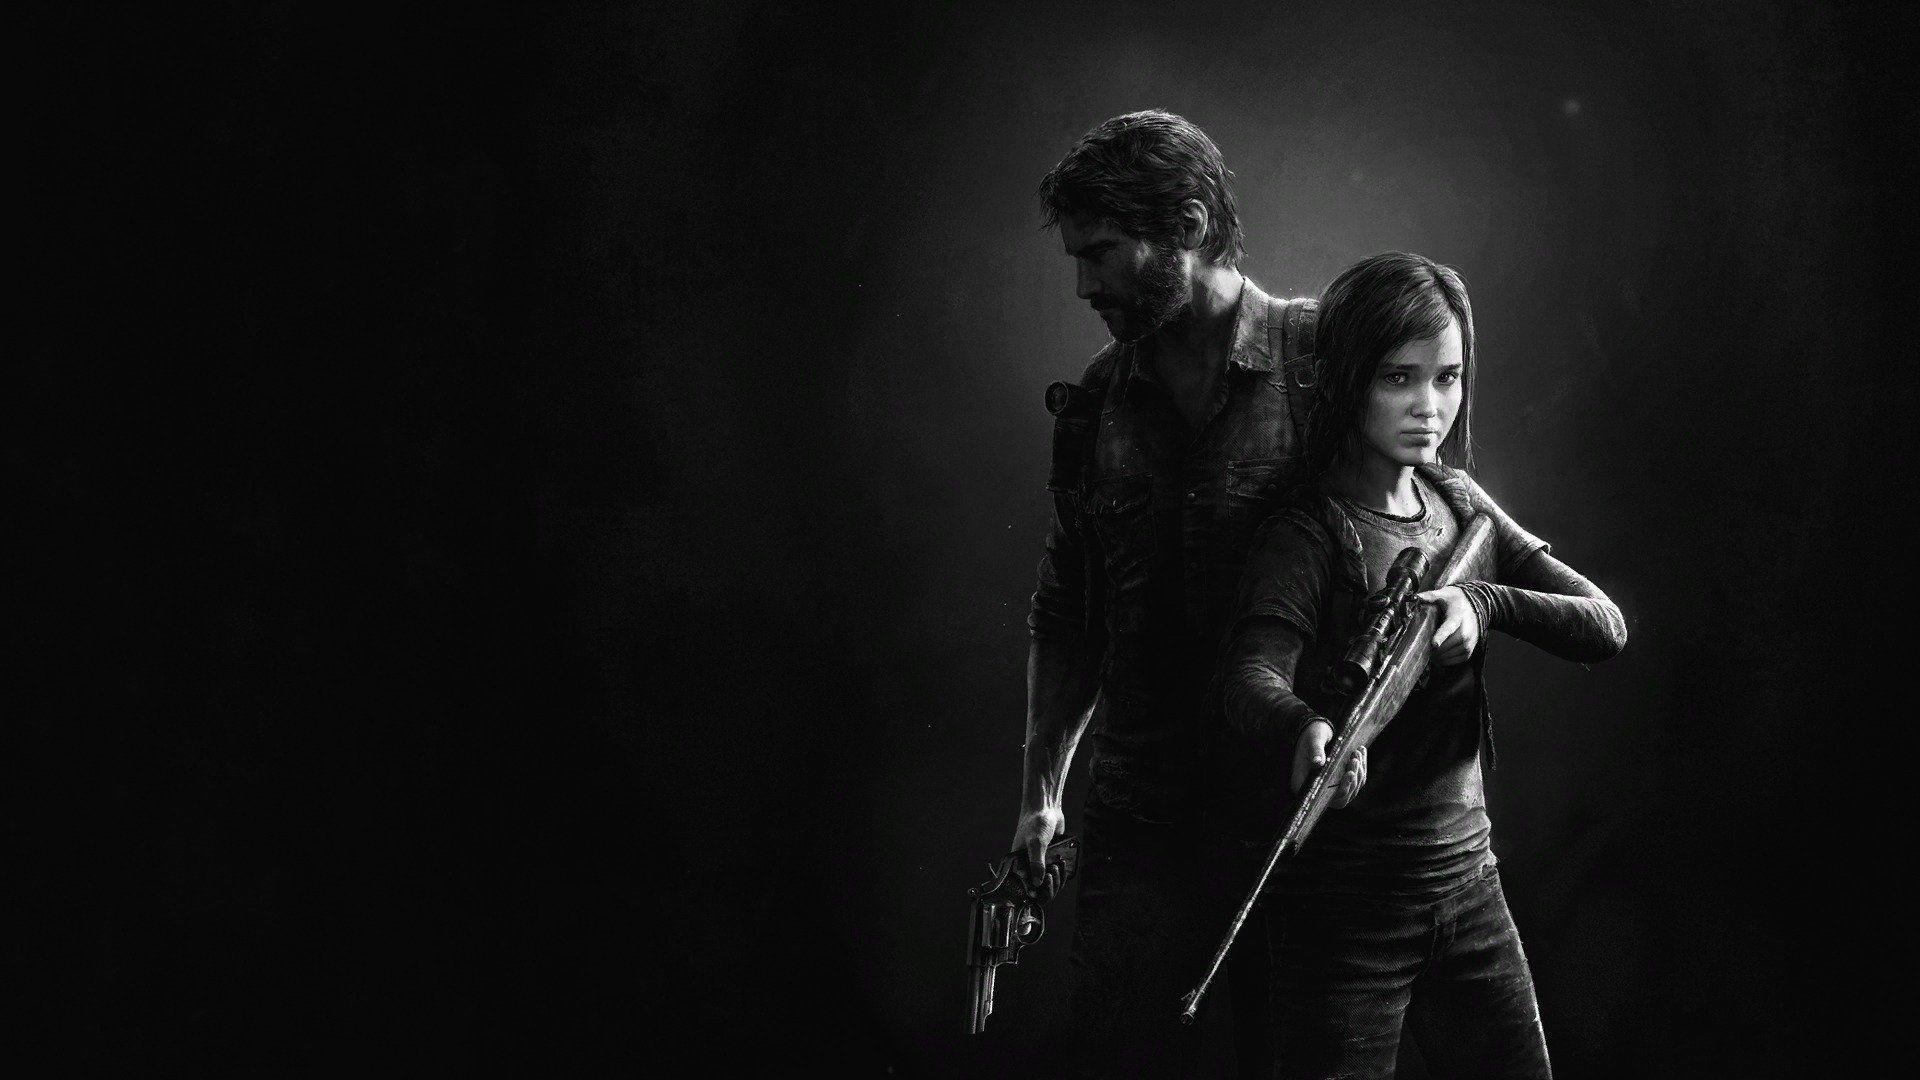 The Last Of Us HD Wallpaper